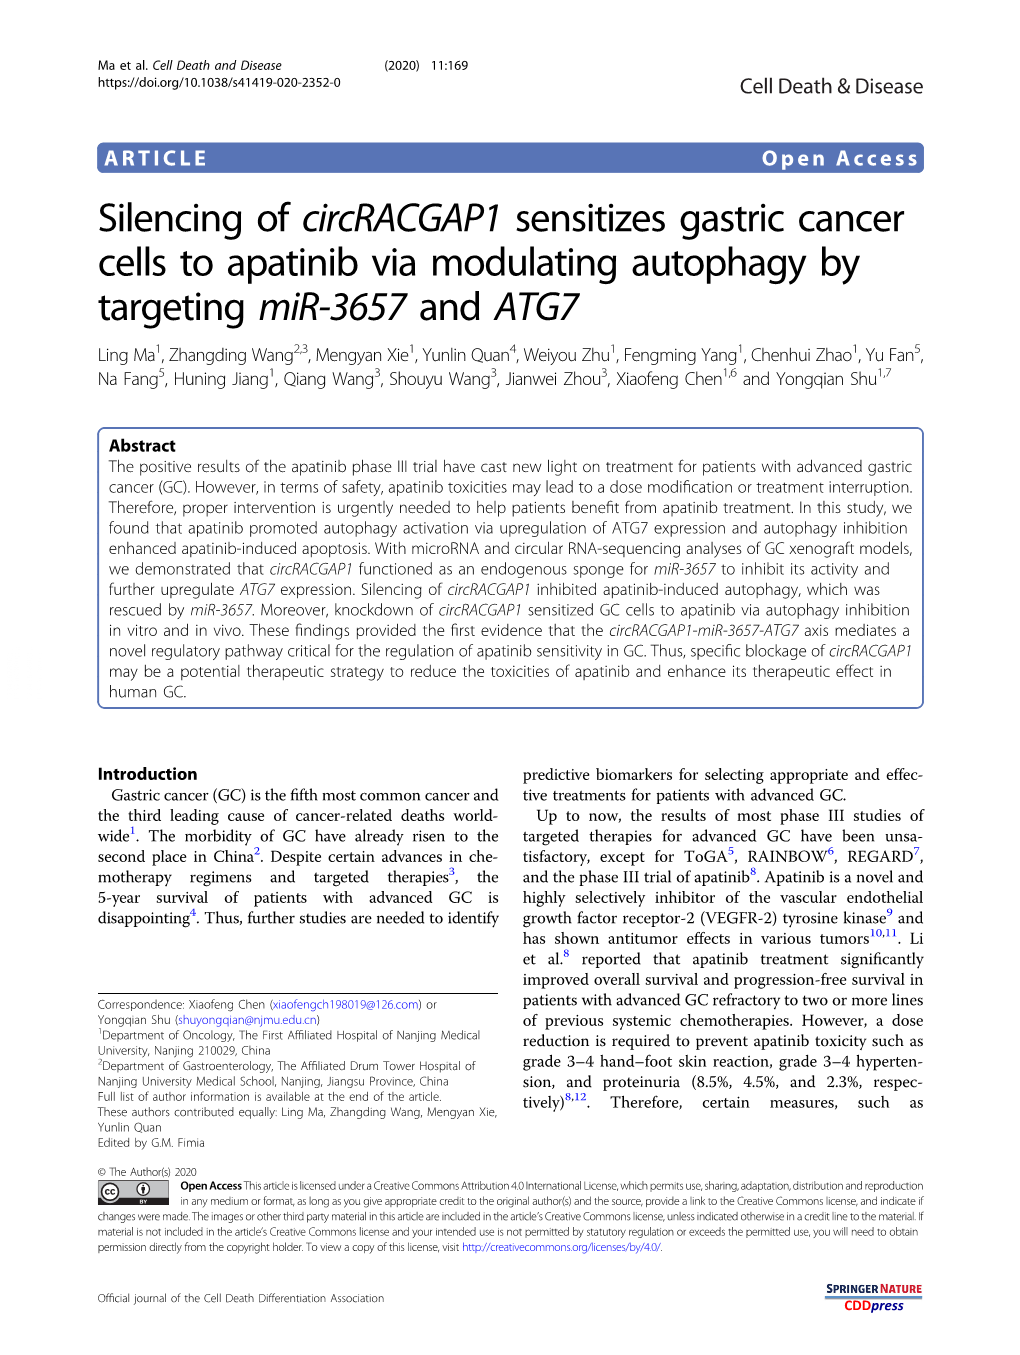 Silencing of Circracgap1 Sensitizes Gastric Cancer Cells to Apatinib Via